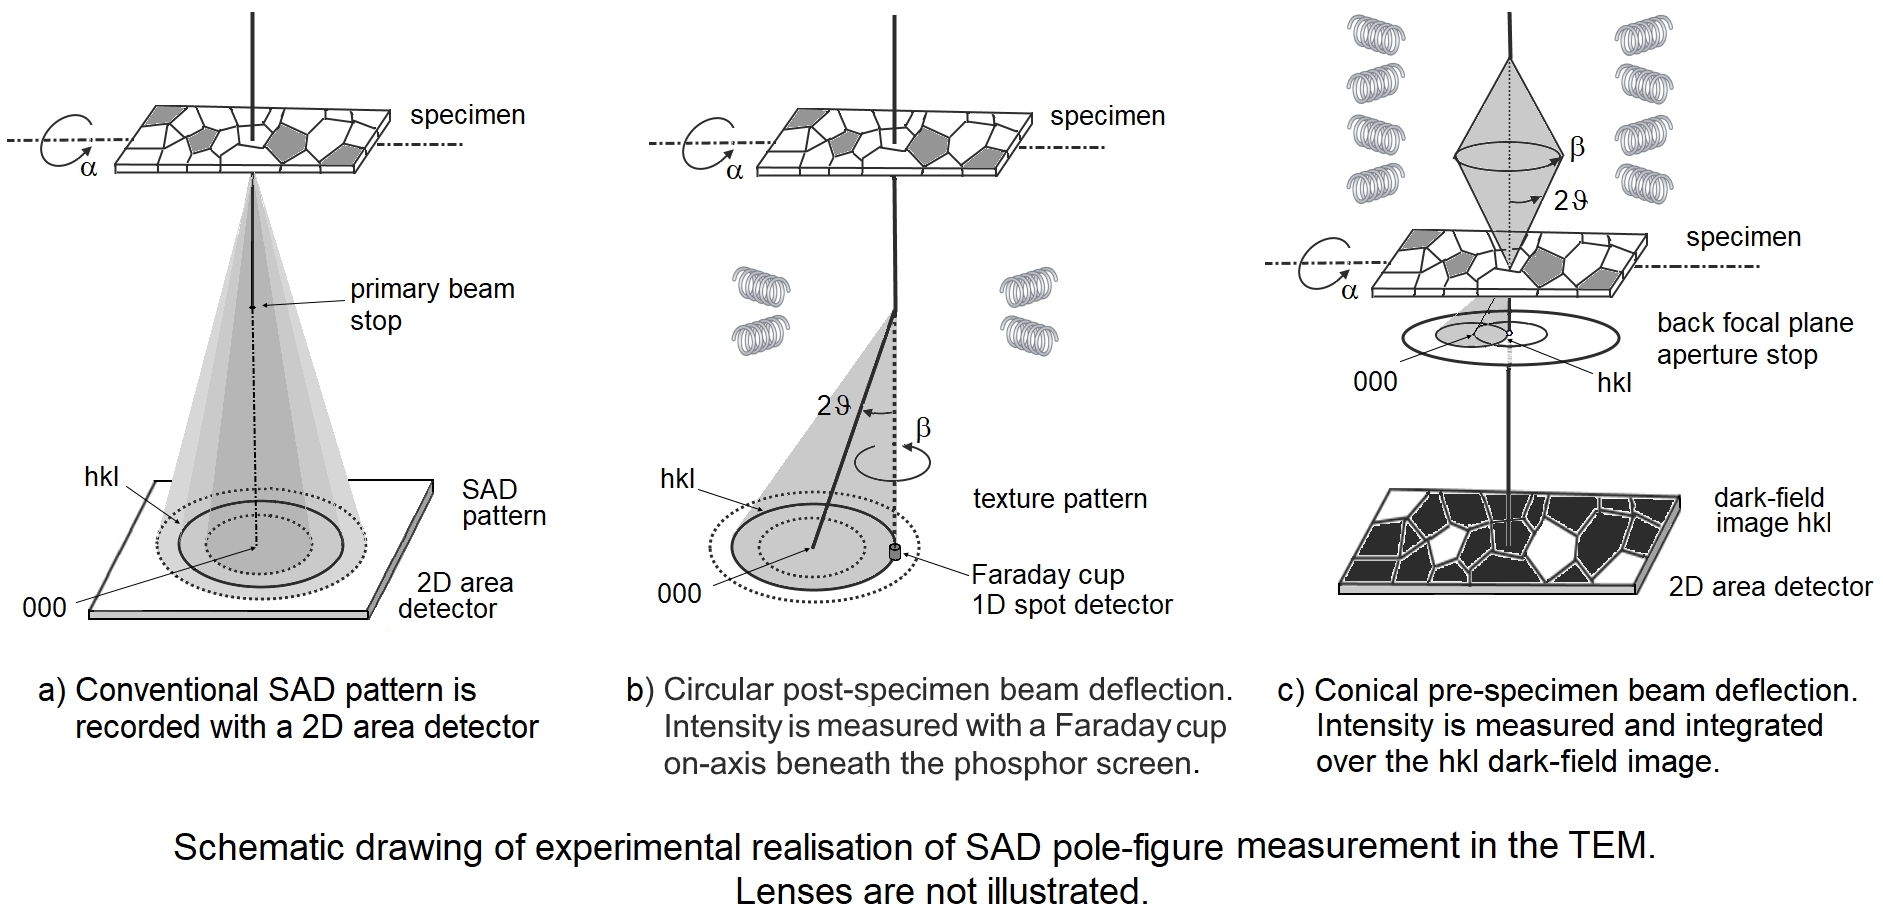 The principles of SAD pole-figure measurement.